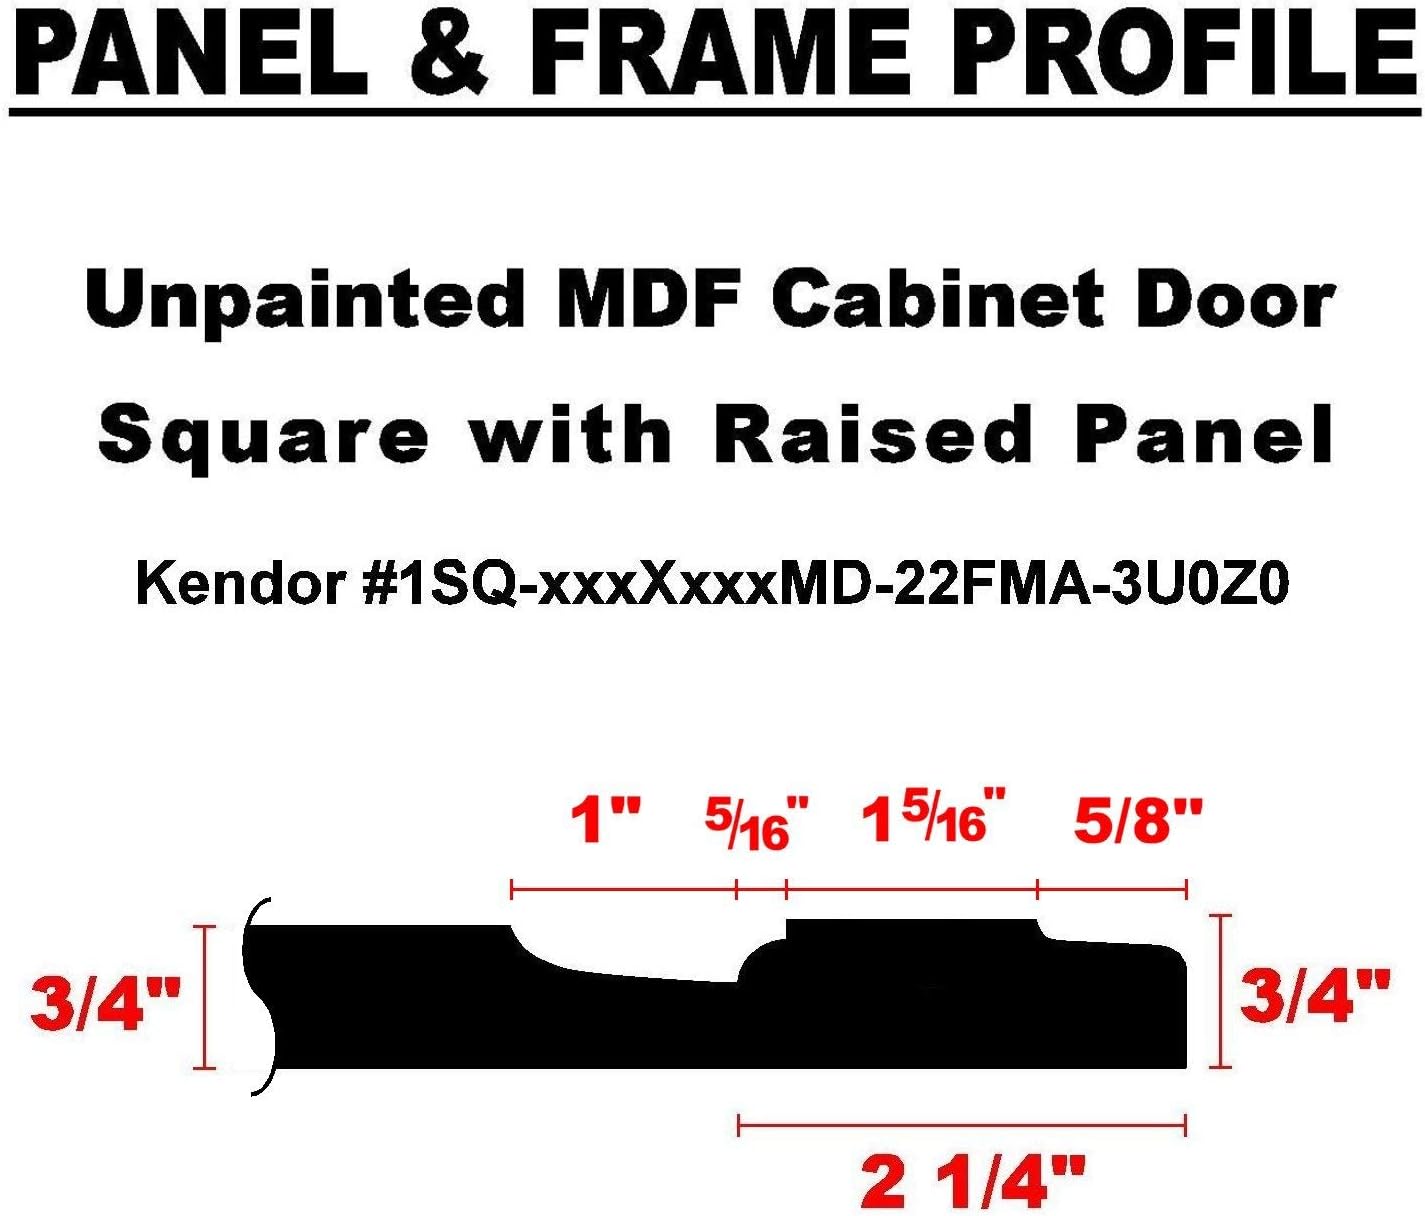 Kendor Unpainted MDF Cabinet Door, Square with Raised Panel, 28H x 14W